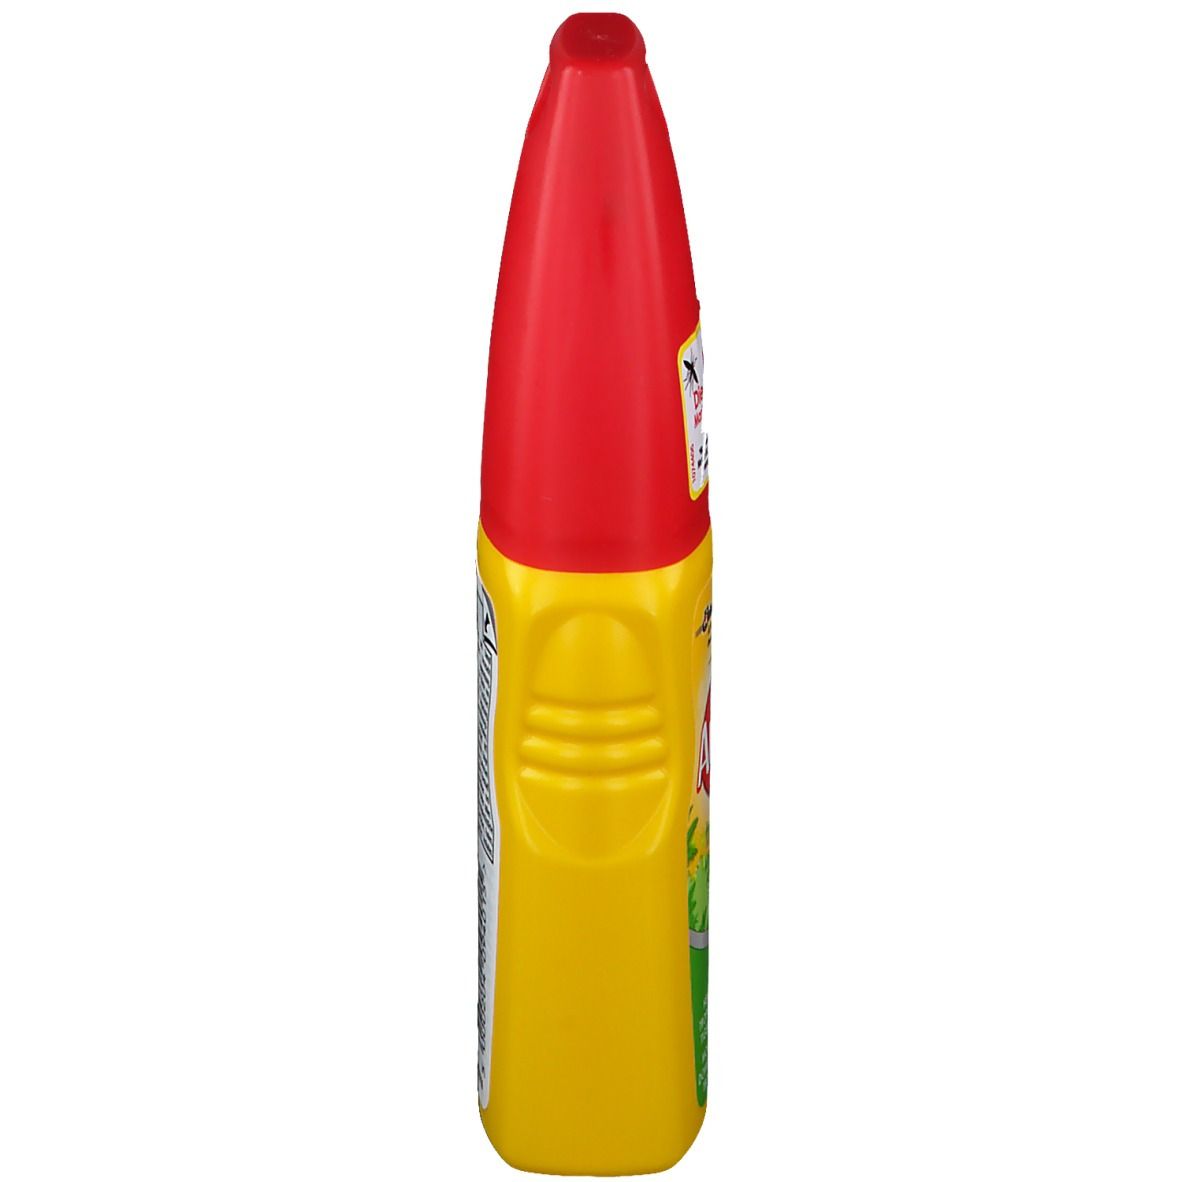 Autan® Tropical Pumpspray